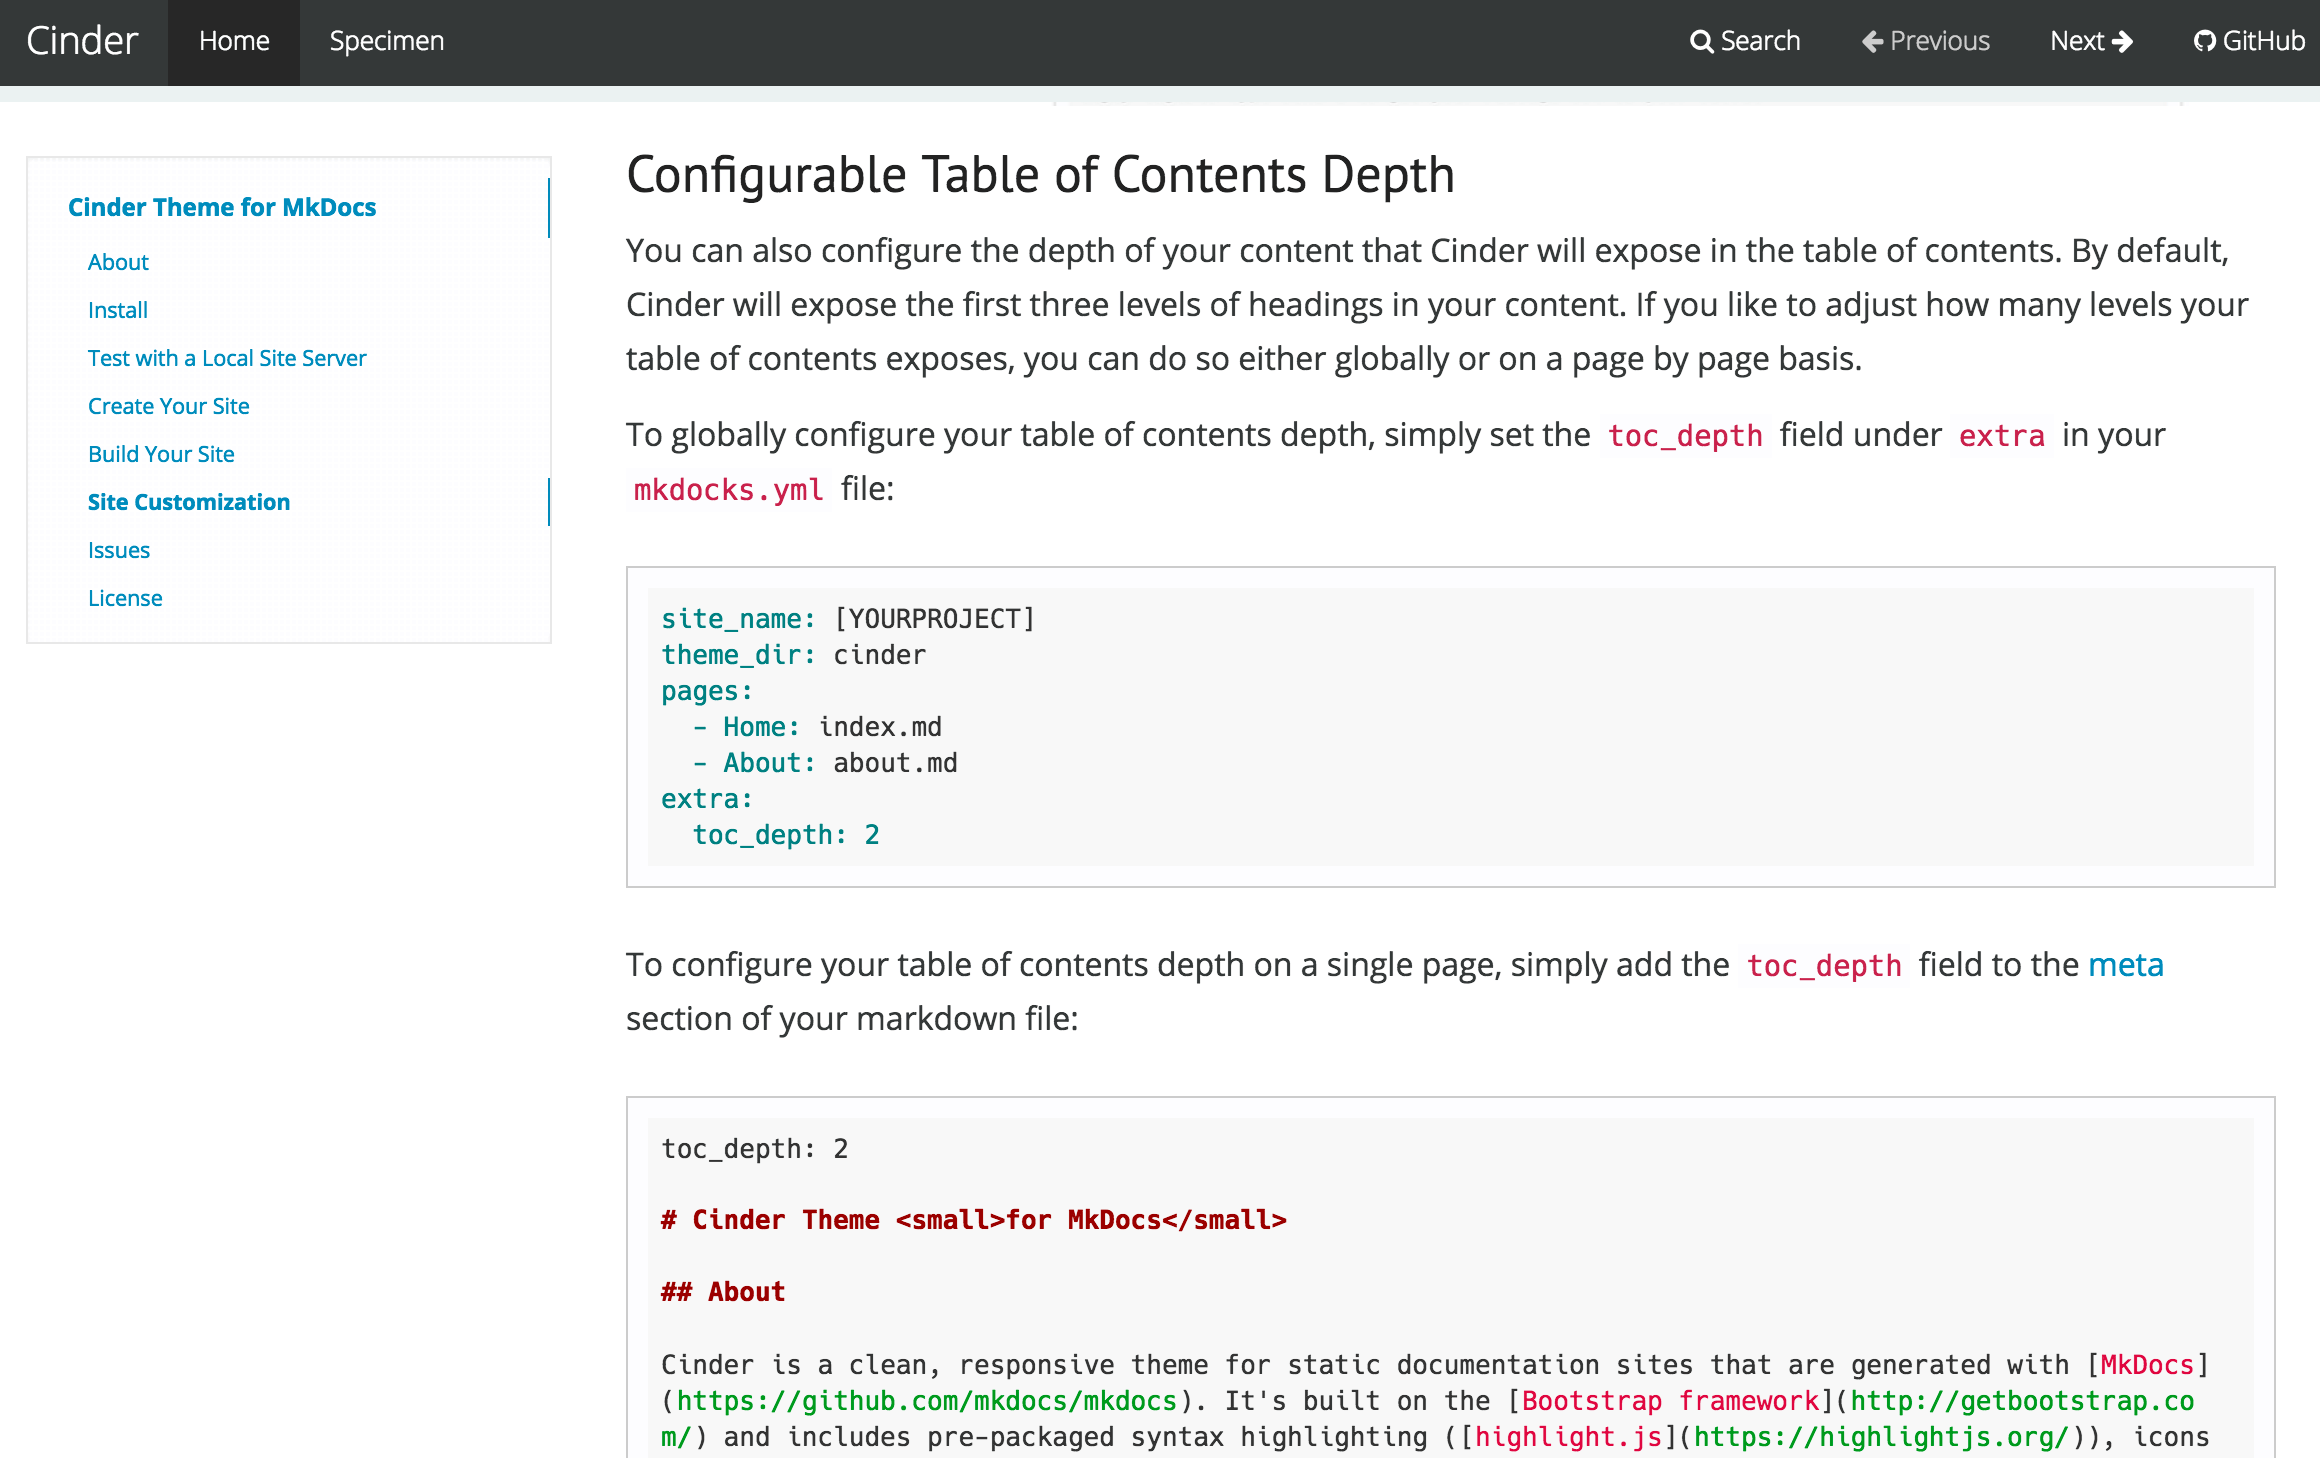 Configurable Table Of Contents Depth Screenshot